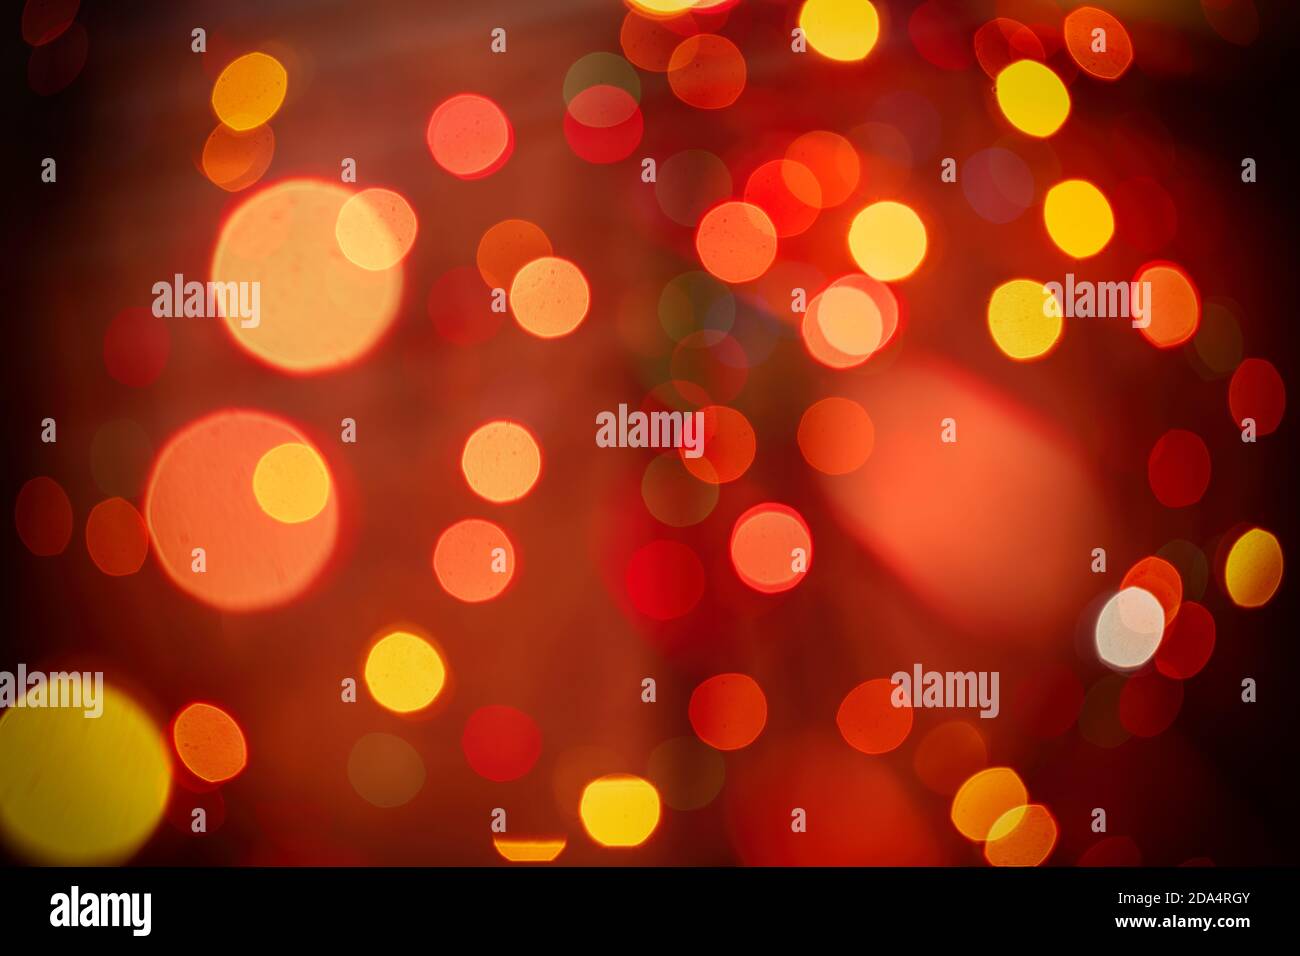 Christmas lights colorful bokeh background. Holiday festive celebration event atmosphere Stock Photo